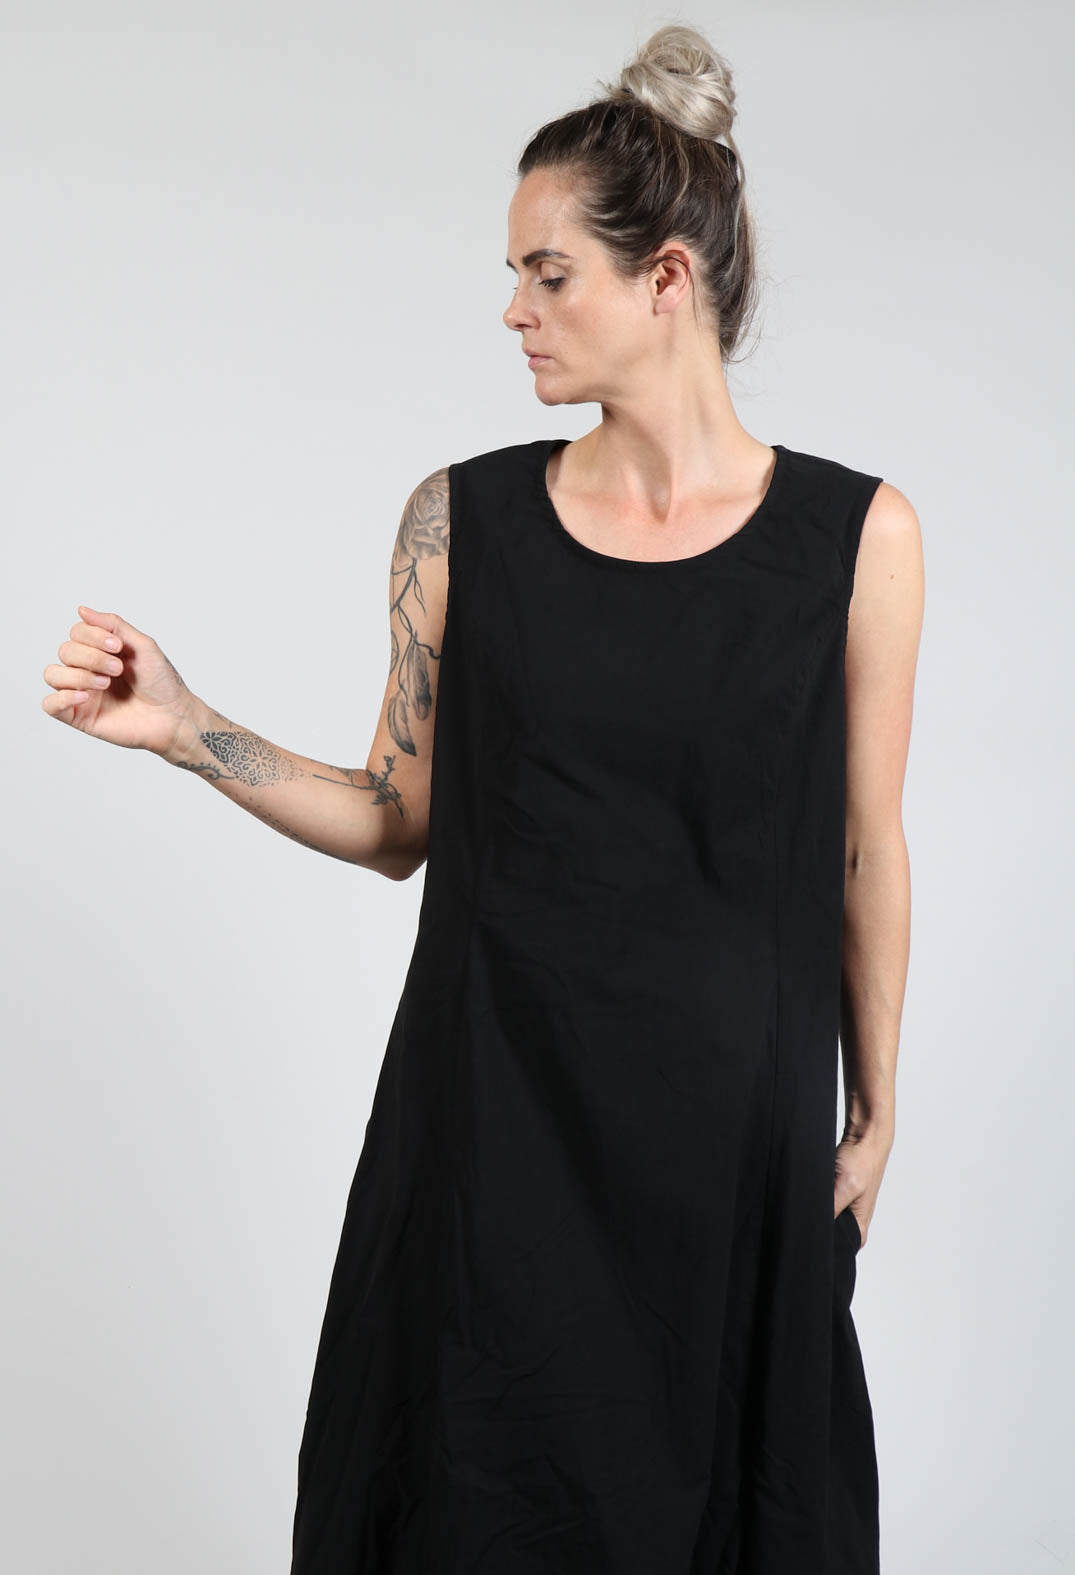 Sleeveless Dress with Gathered Hem in Black